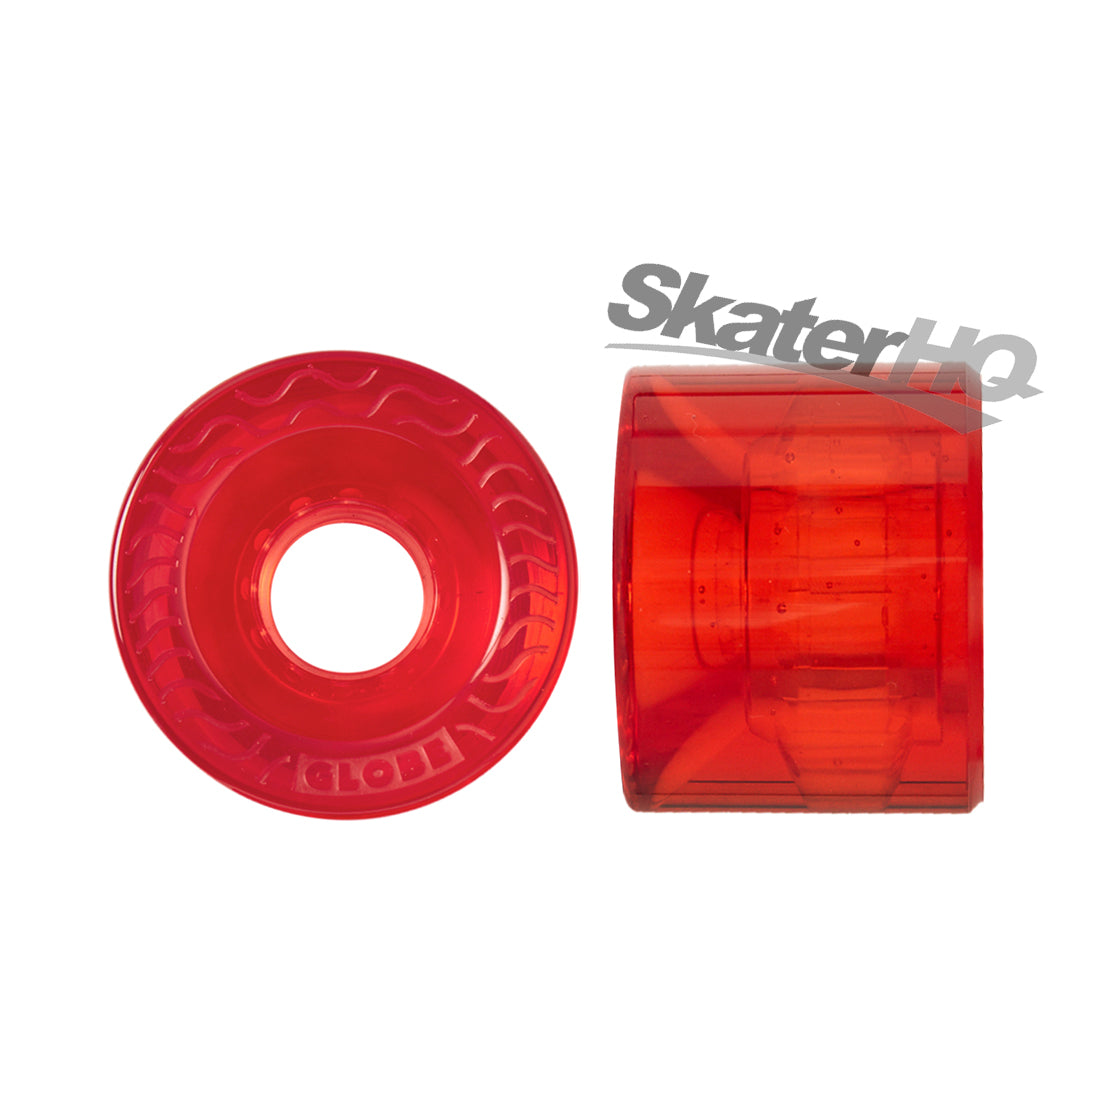 Globe Retro Flex 58mm/83a 4pk - Clear Red Skateboard Wheels